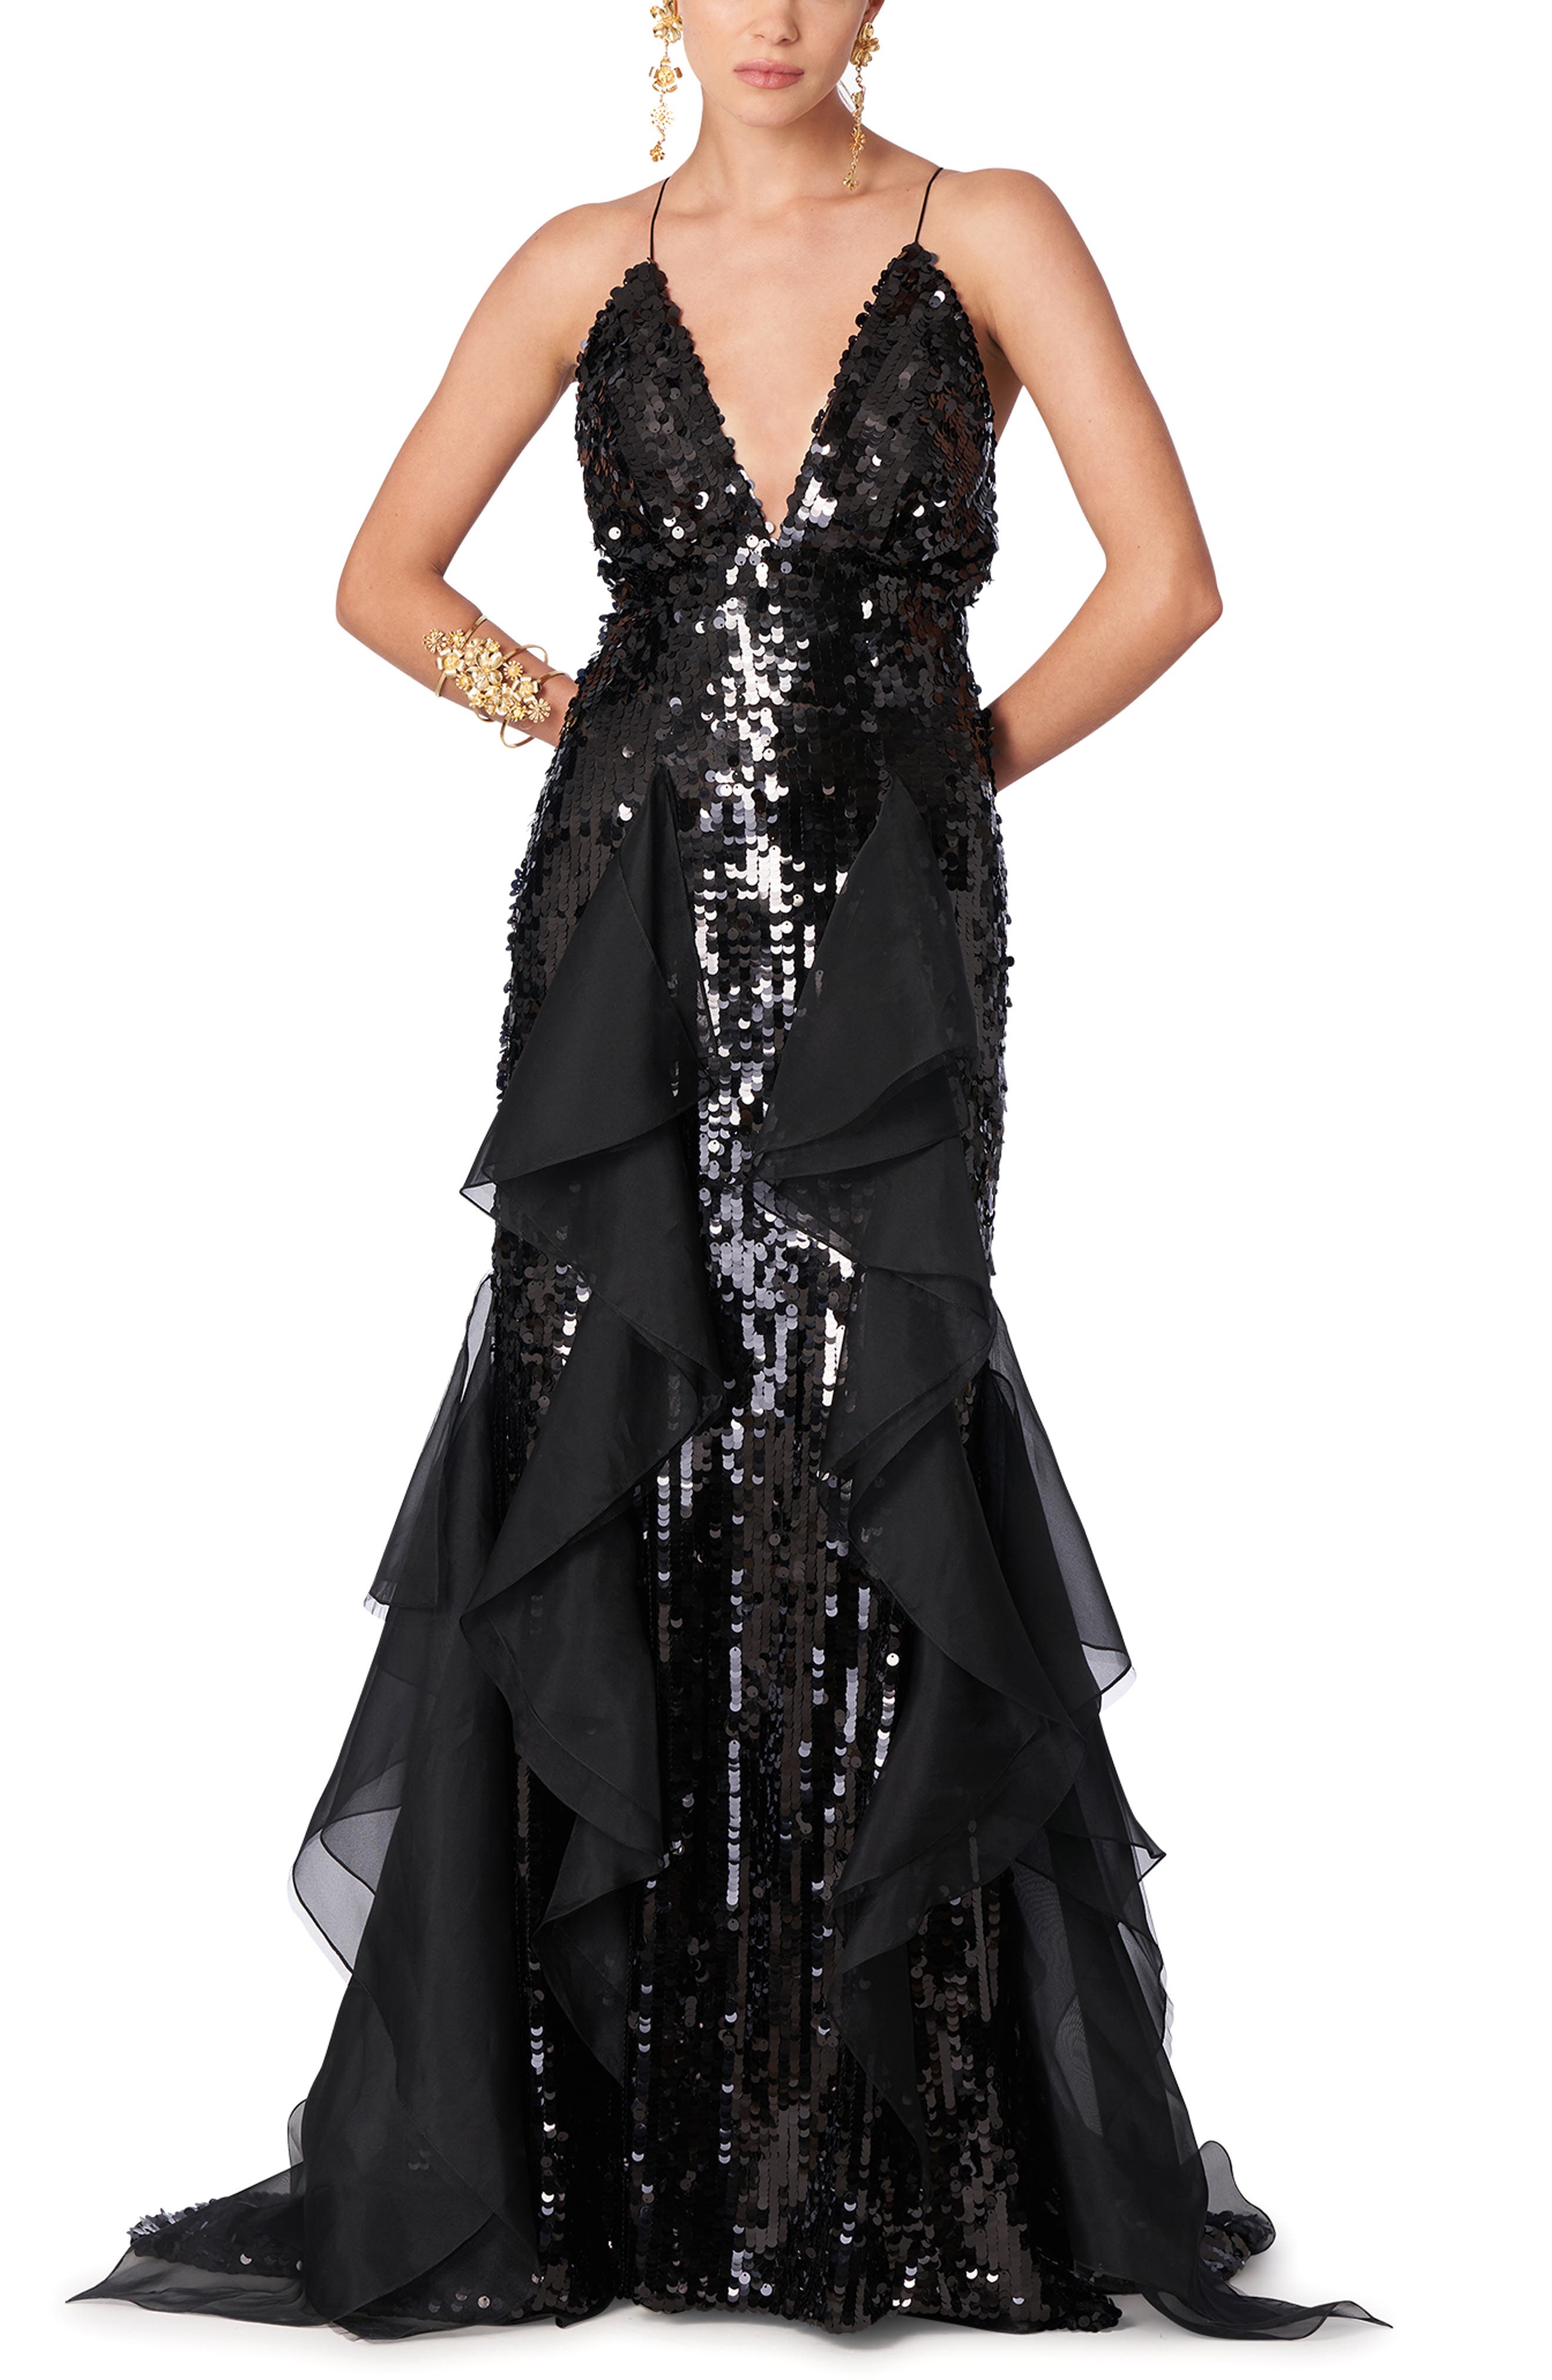 Carolina Herrera Sequin Ruffle Gown in Black at Nordstrom, Size 6